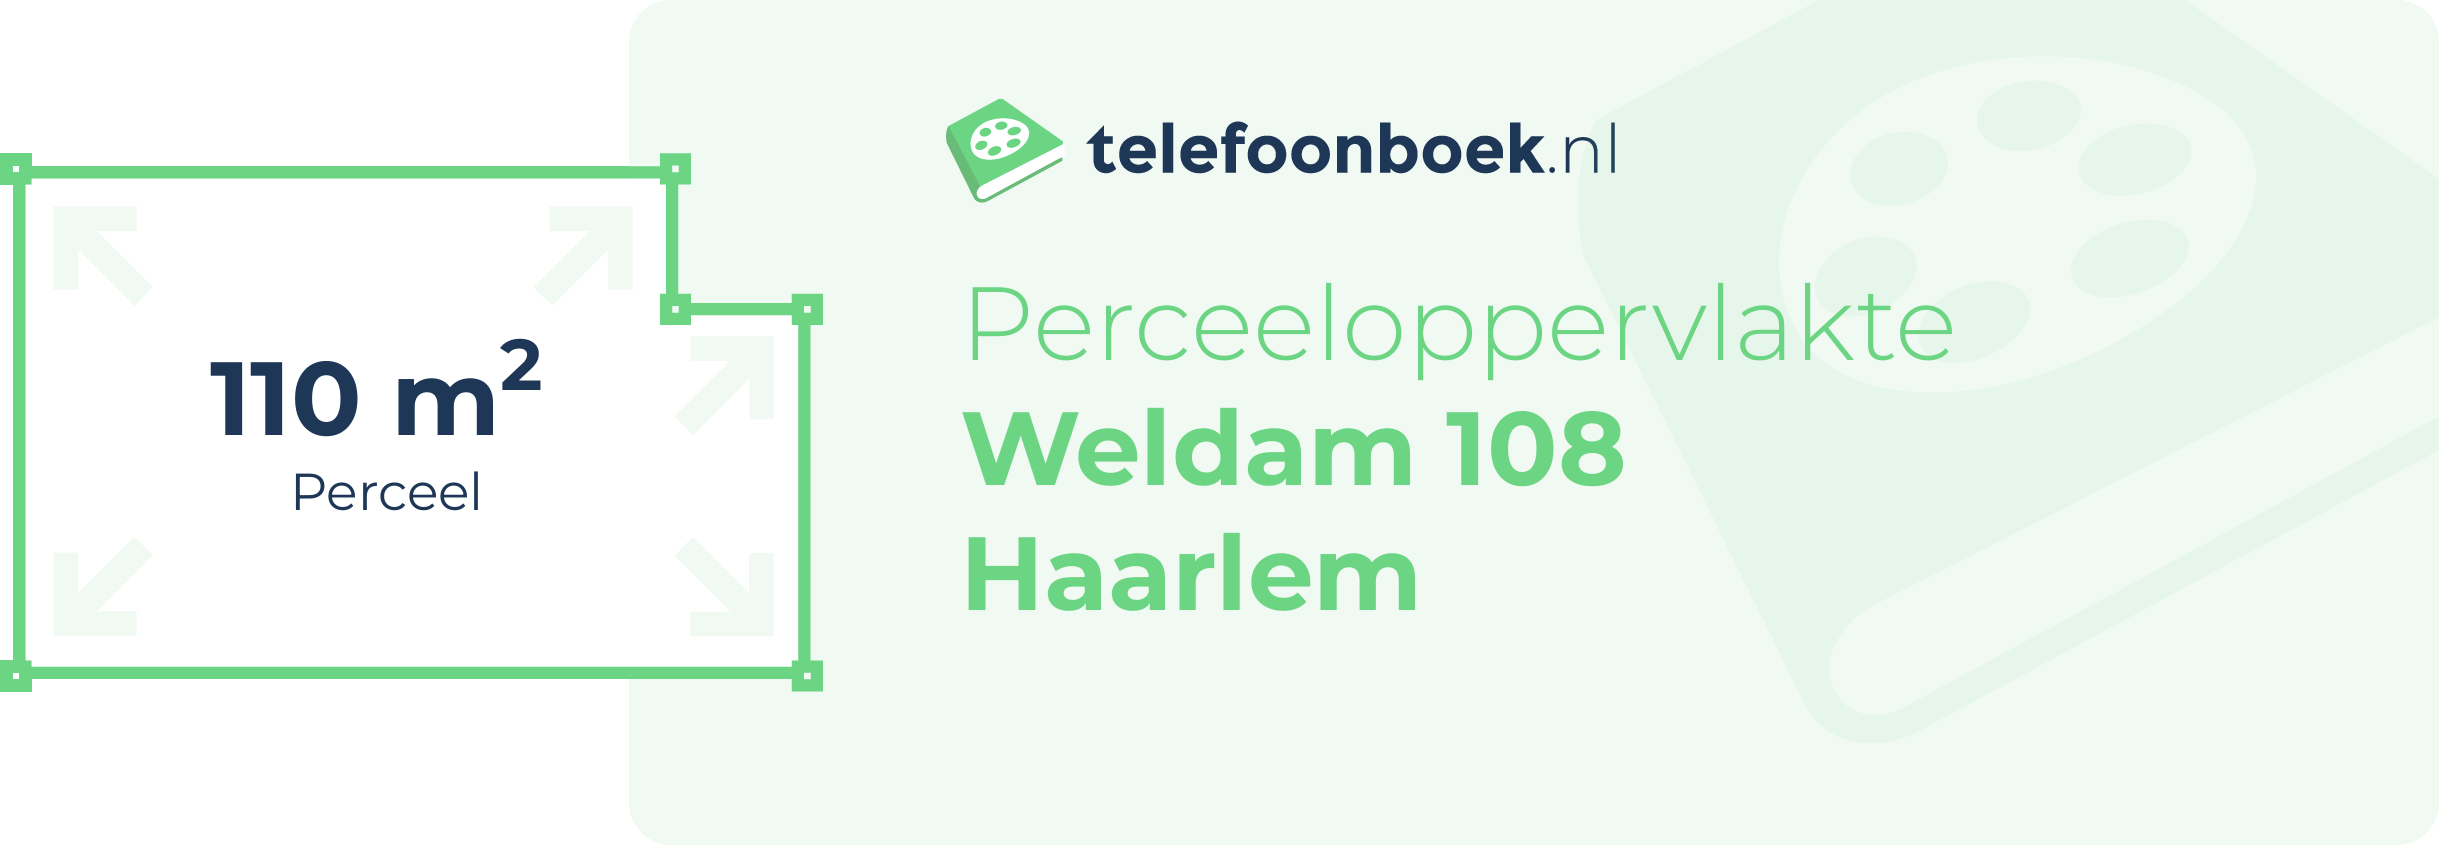 Perceeloppervlakte Weldam 108 Haarlem